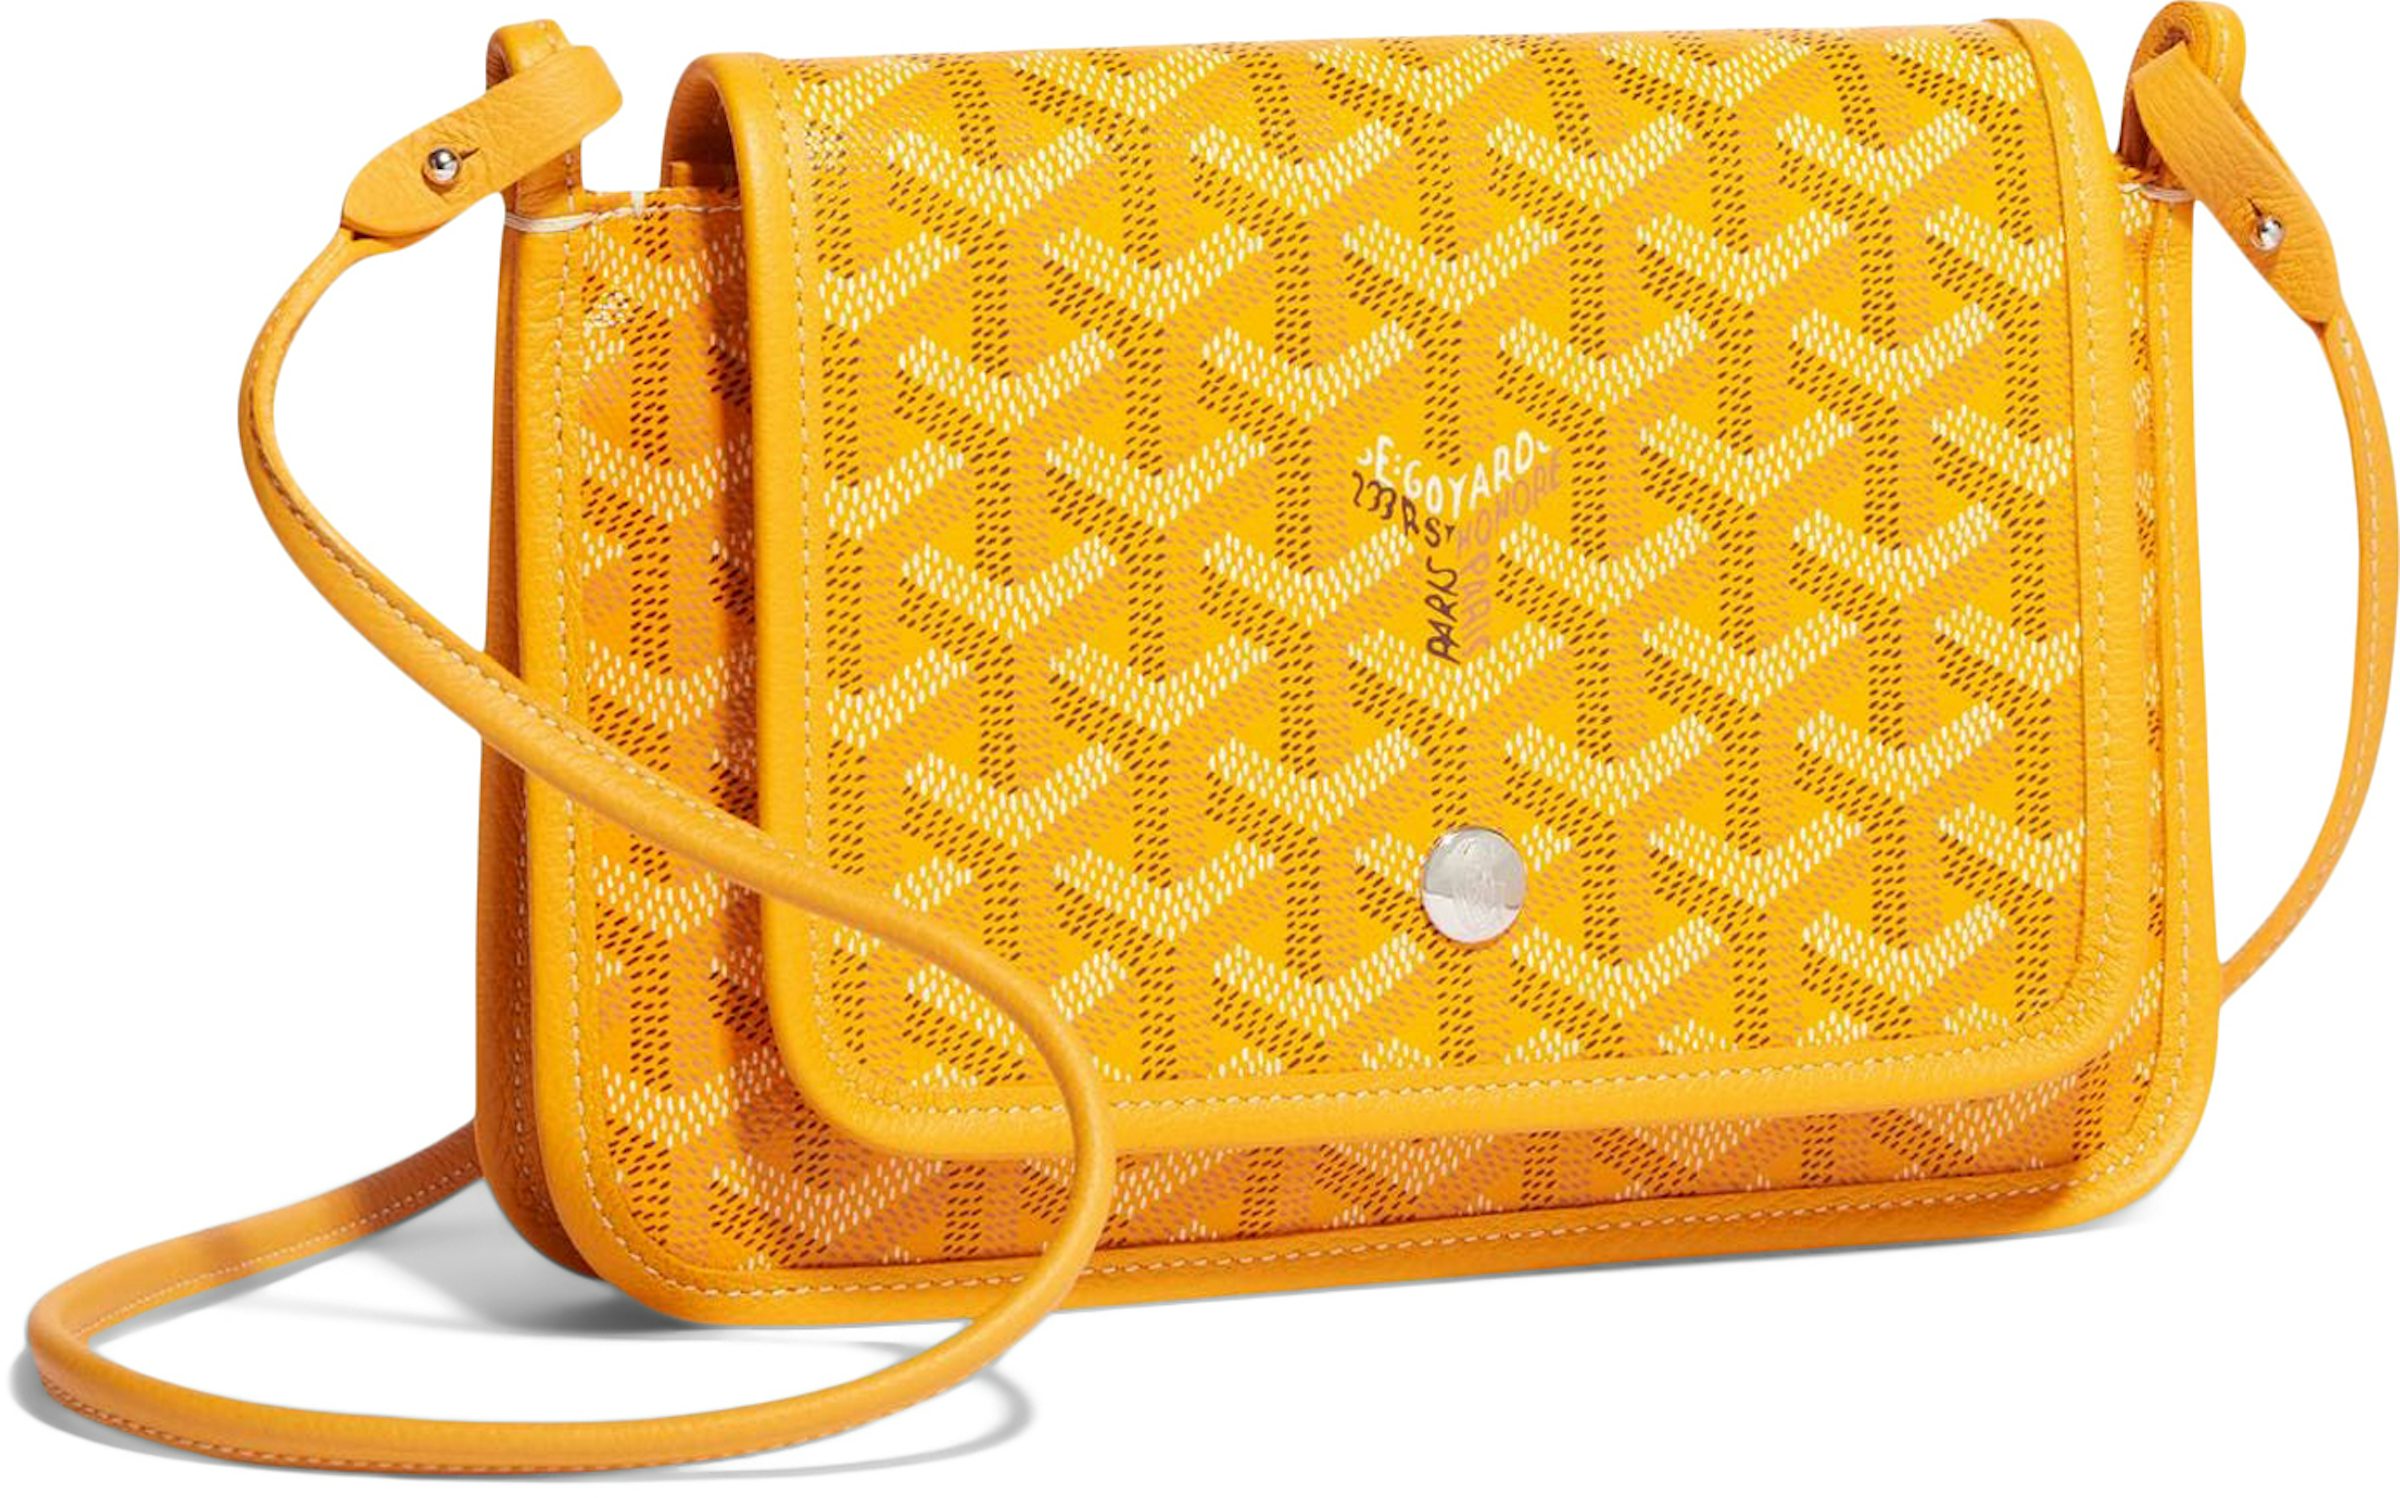 The Plumet Wallet & Bag: The Art of Modularity by Goyard Designed